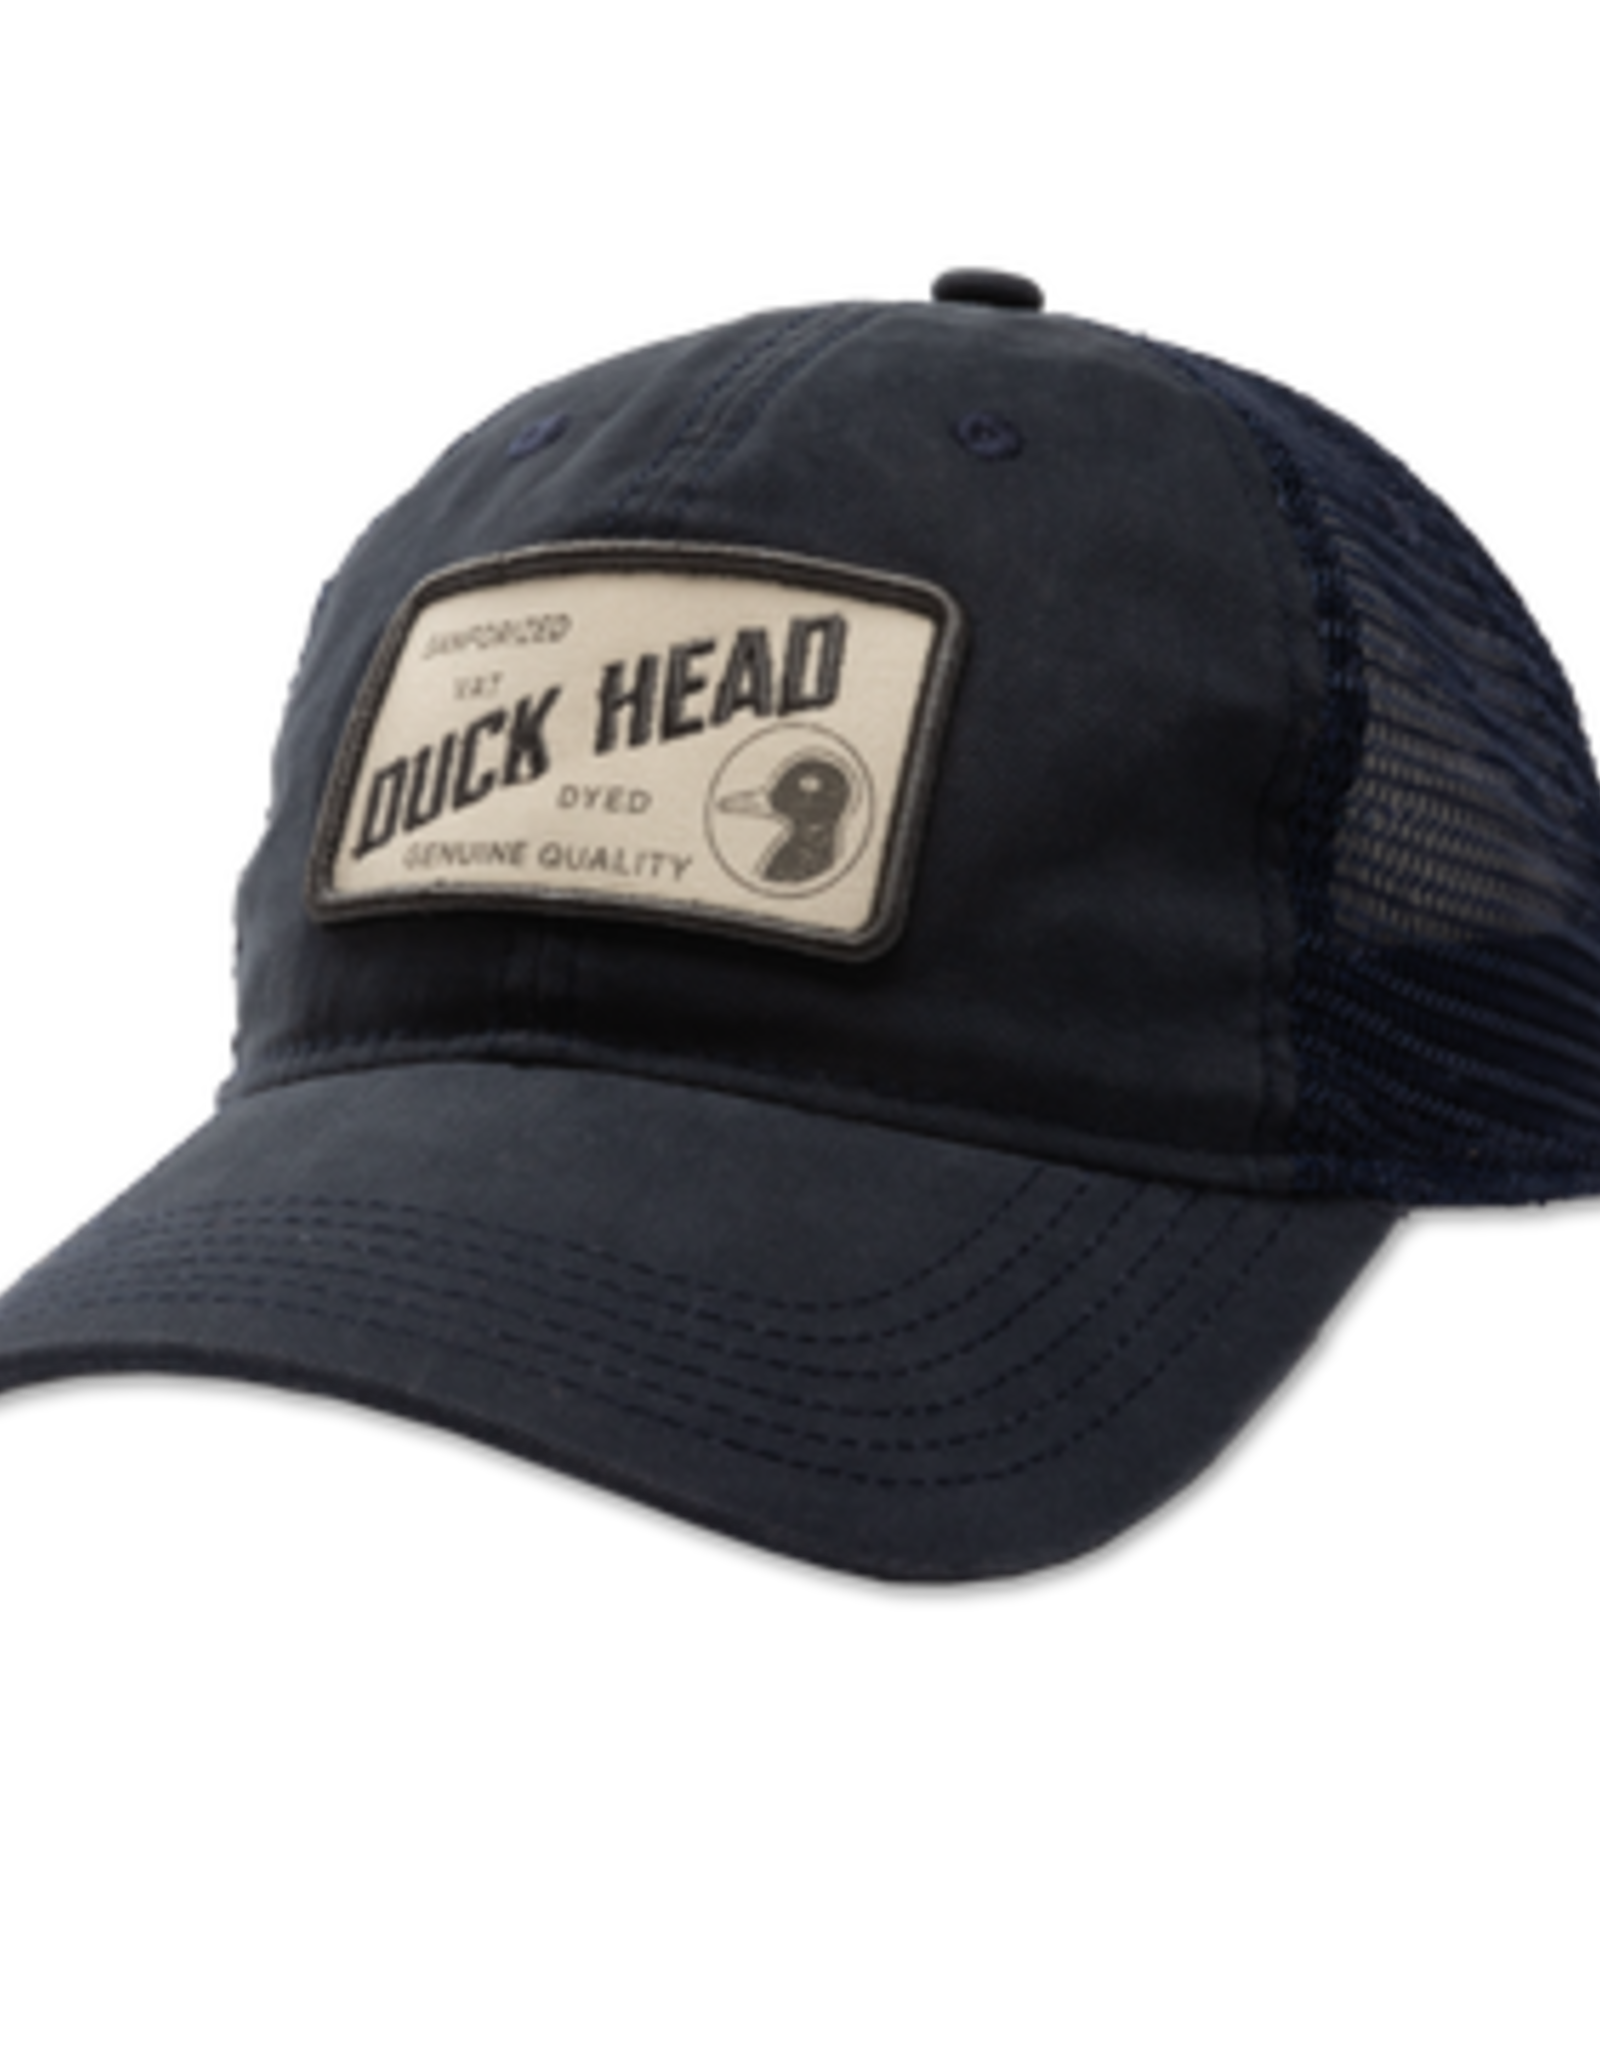 Duckhead Duckhead Sanforized Trucker Hat